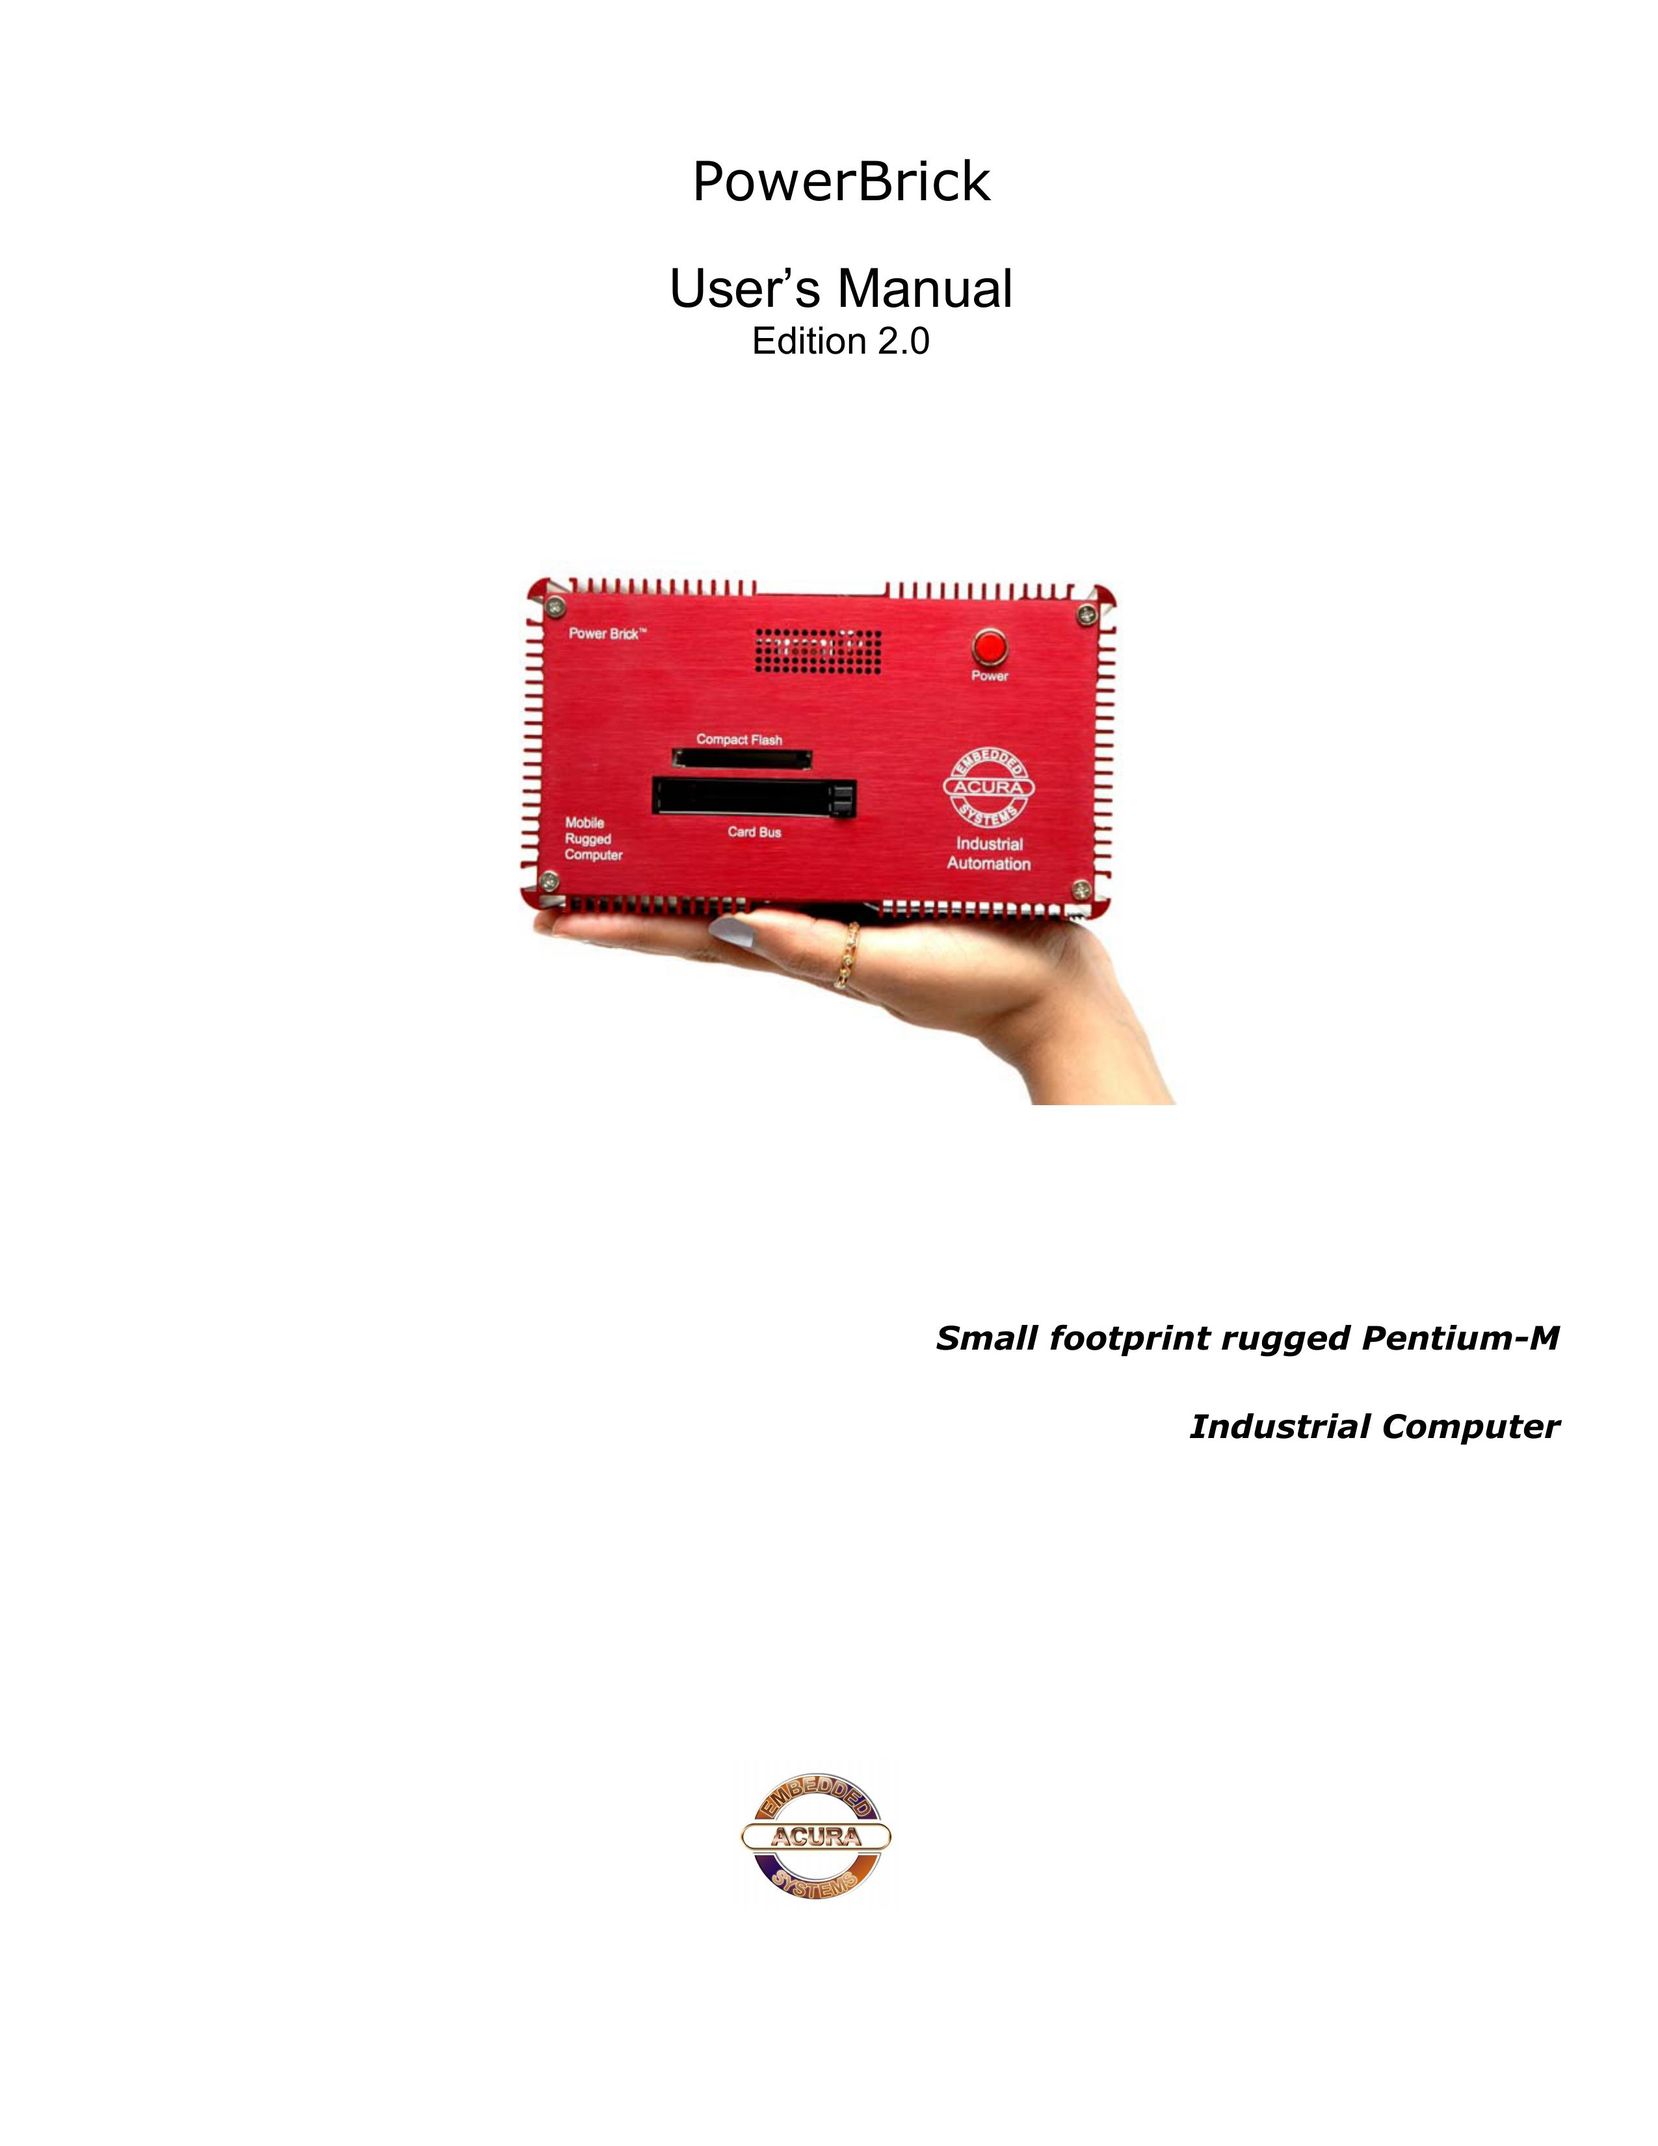 Acura Embedded Small footprint rugged Pentium-M Computer Hardware User Manual